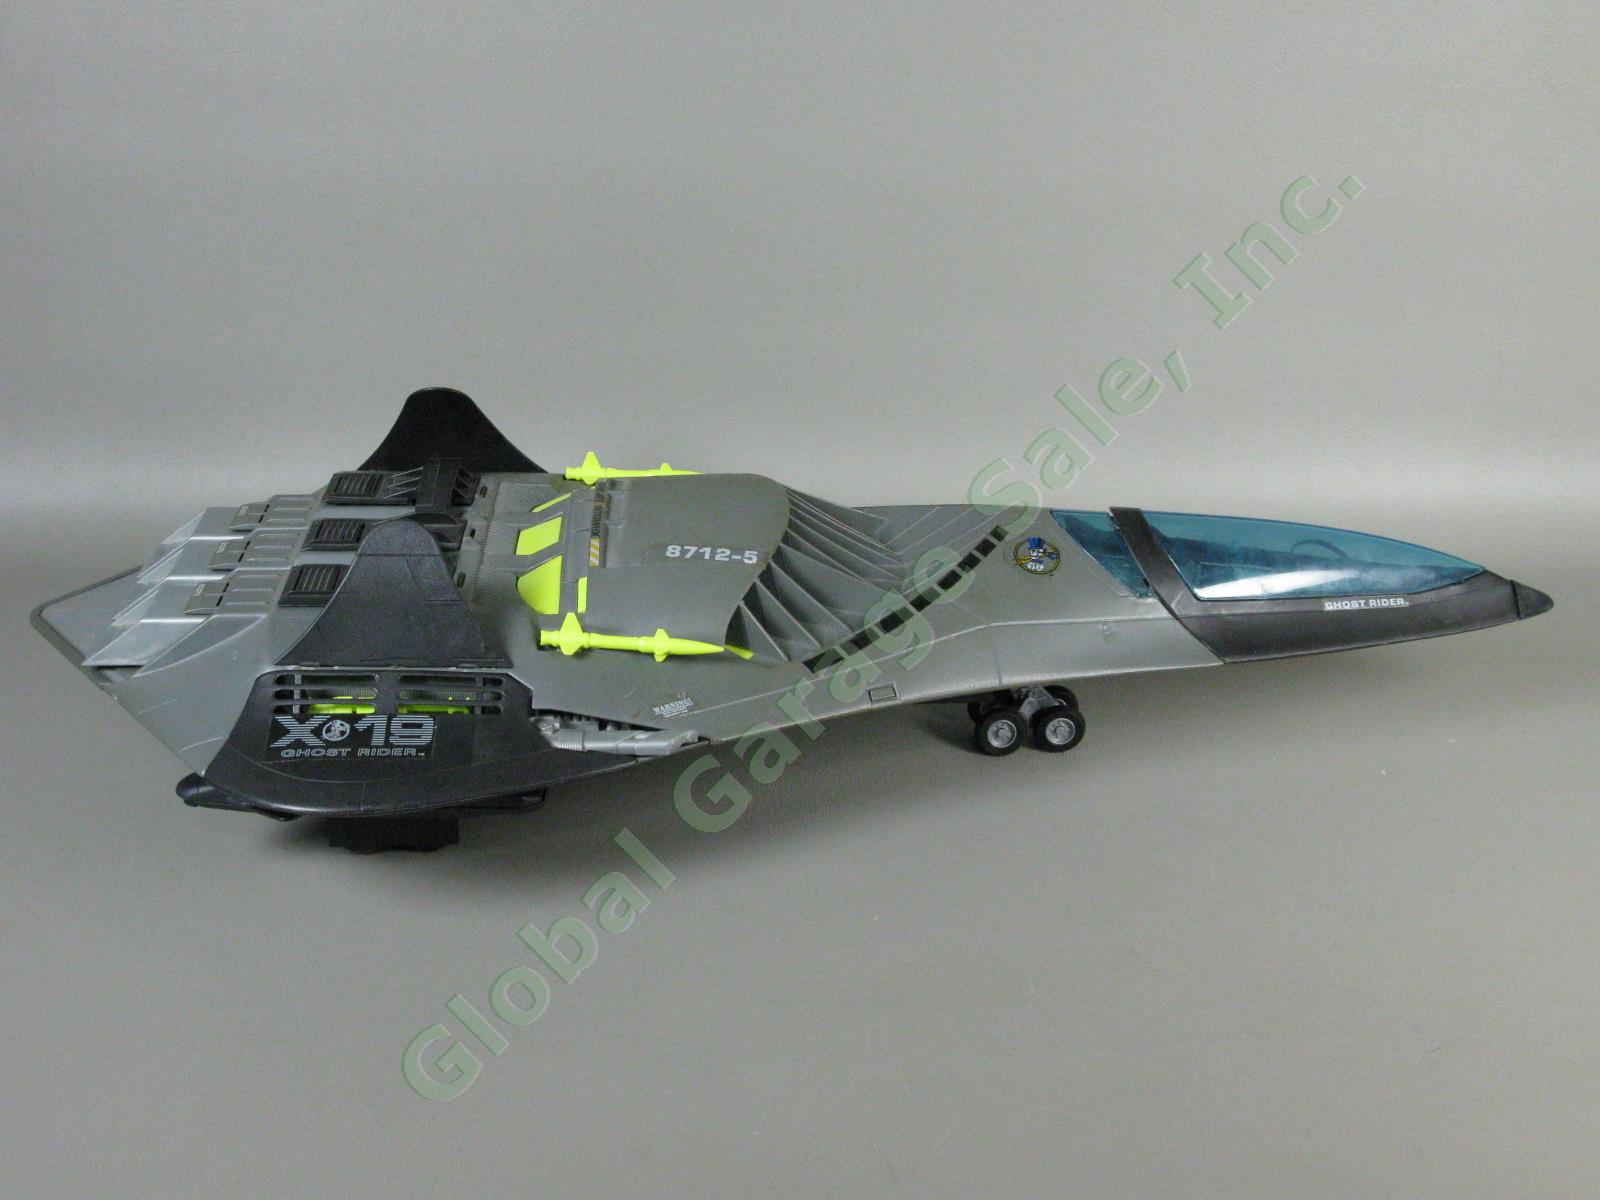 Complete VTG 1988 GI Joe Phantom X-19 Stealth Fighter Jet Airplane Ghostrider NR 3